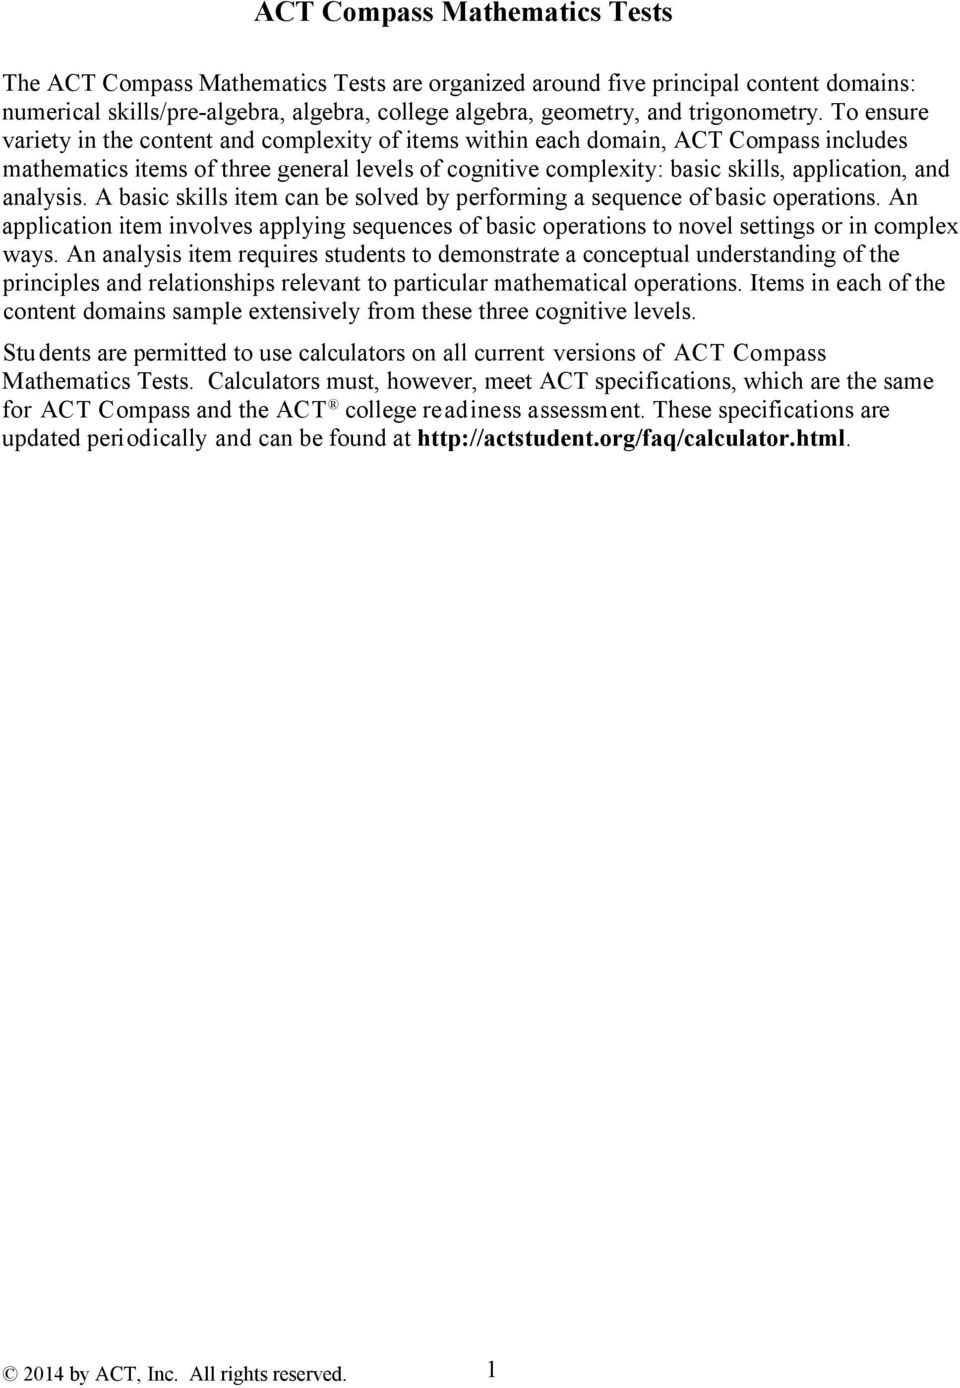 ACT COMPASS-Math Computer-adaptive College Placement Test Exam QA PDF&Simulator 